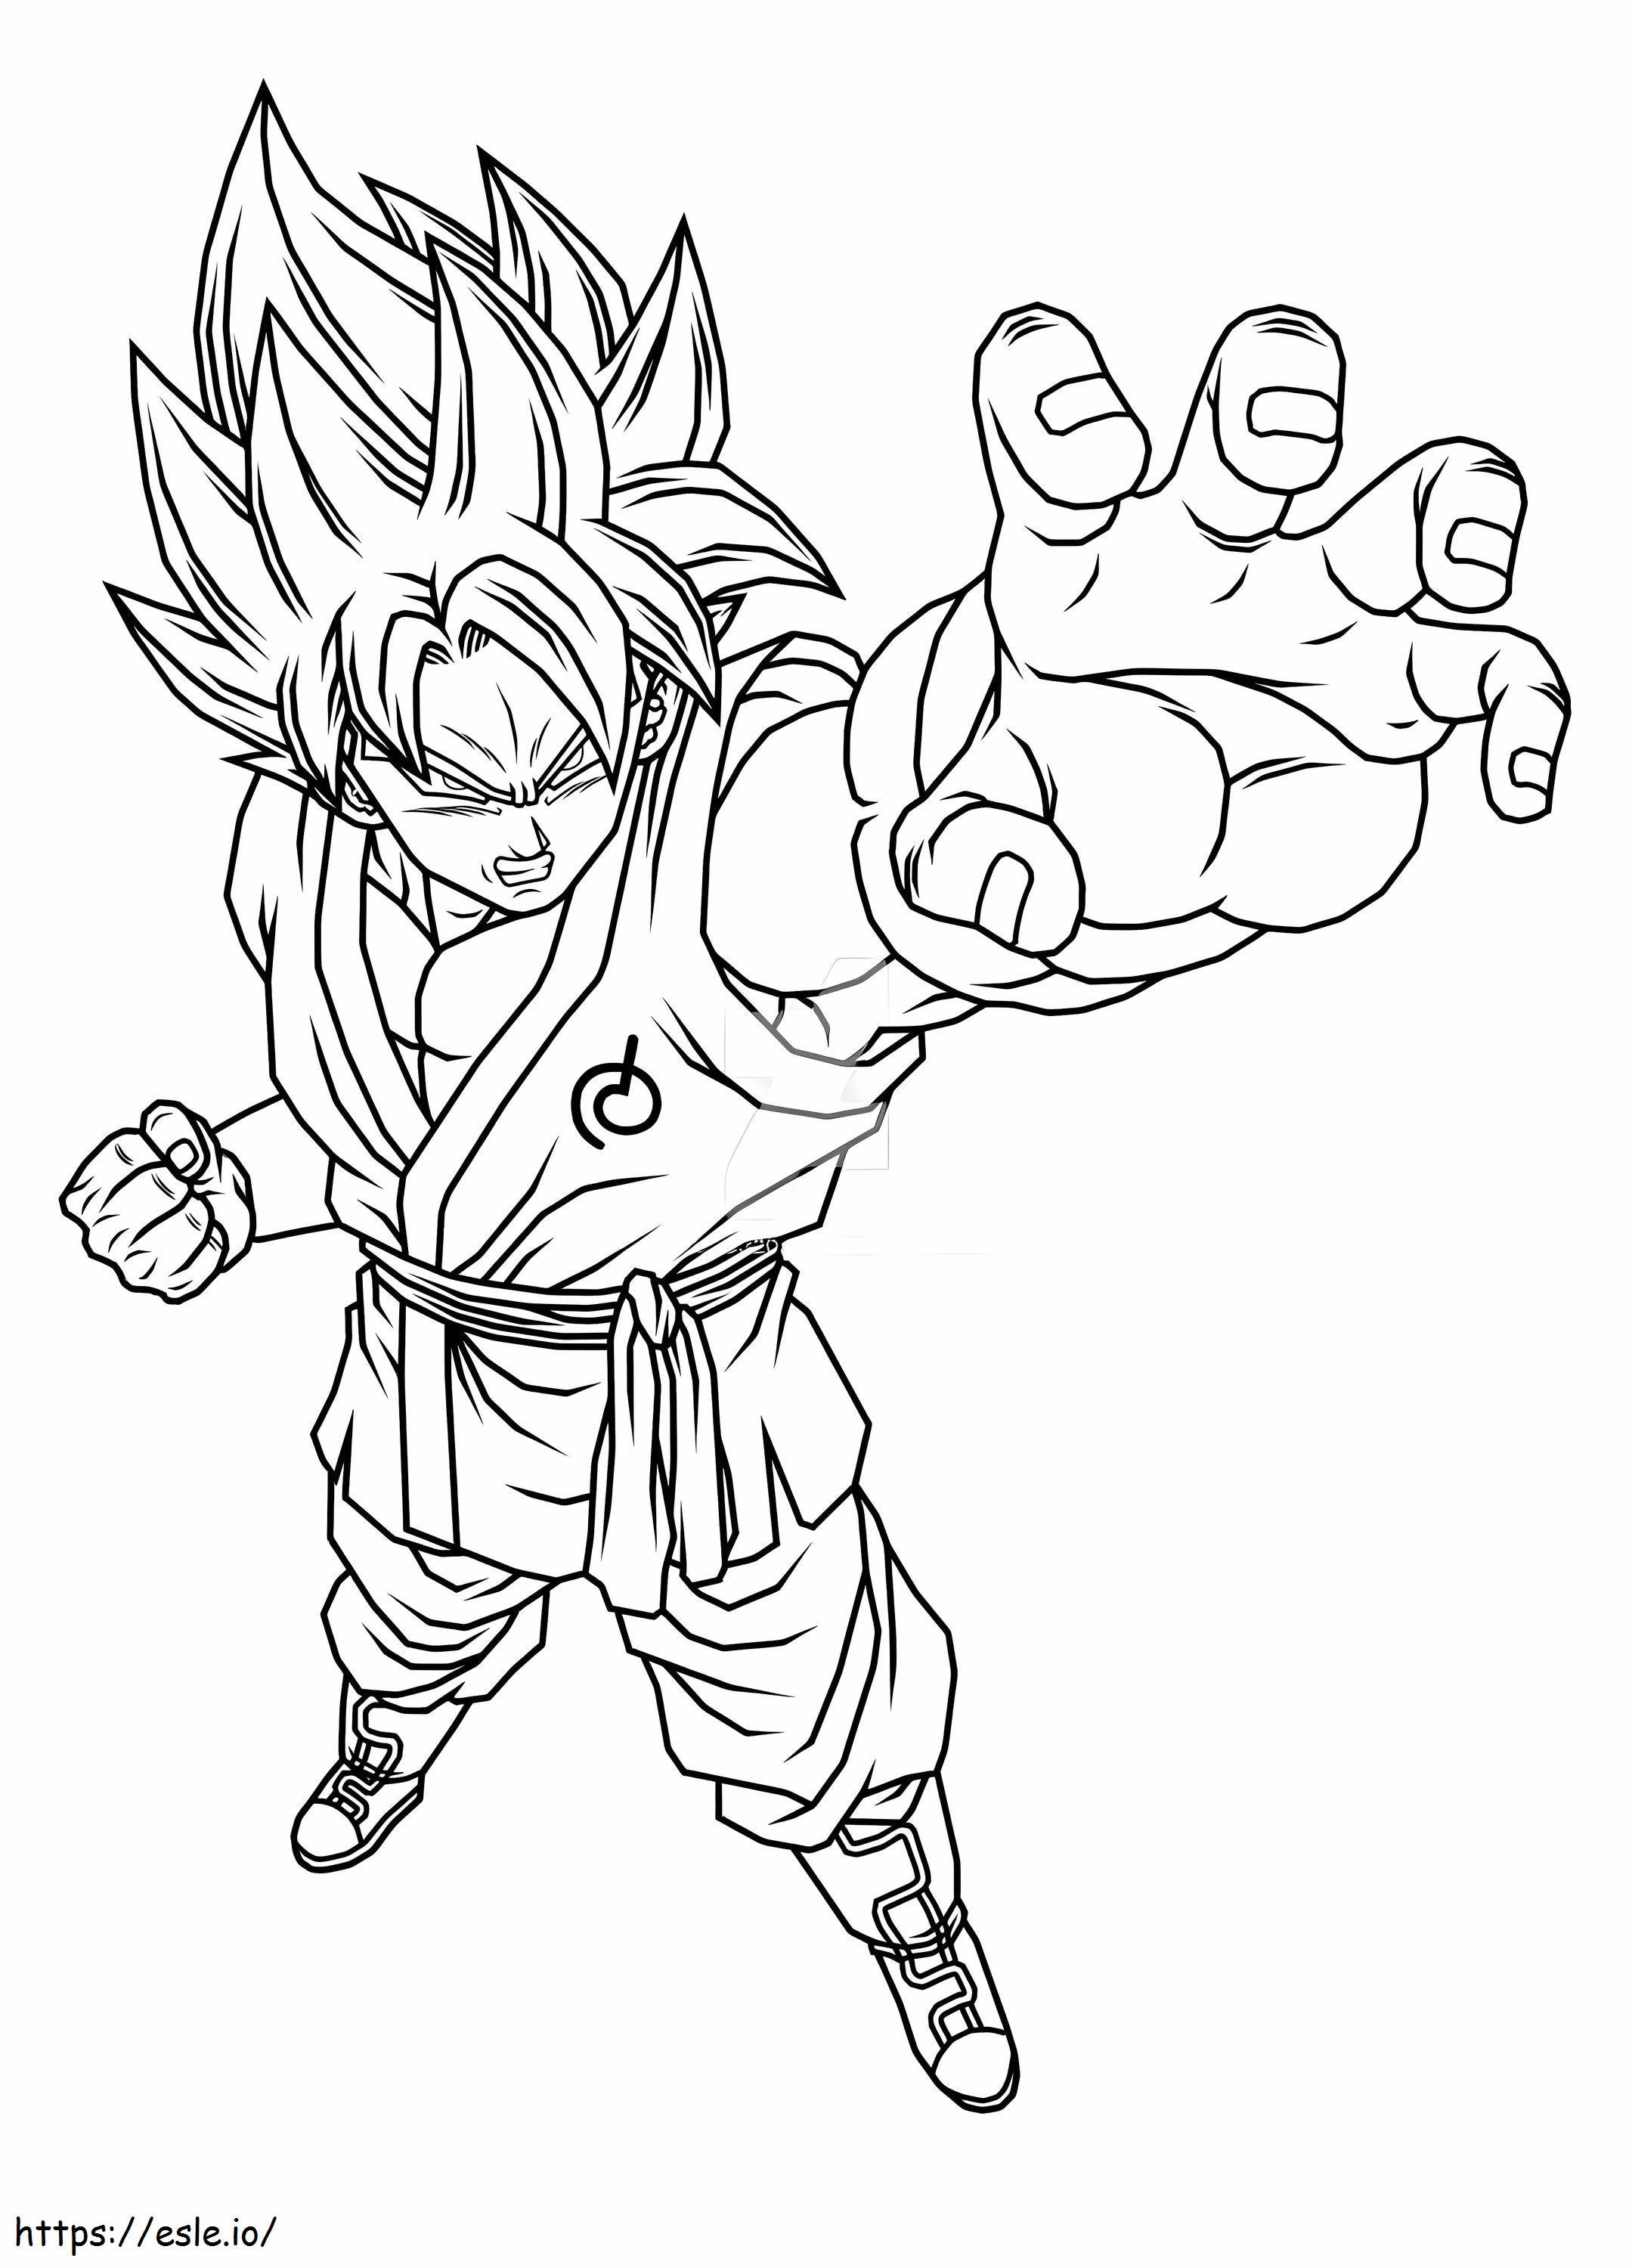 Wütender Goku ausmalbilder